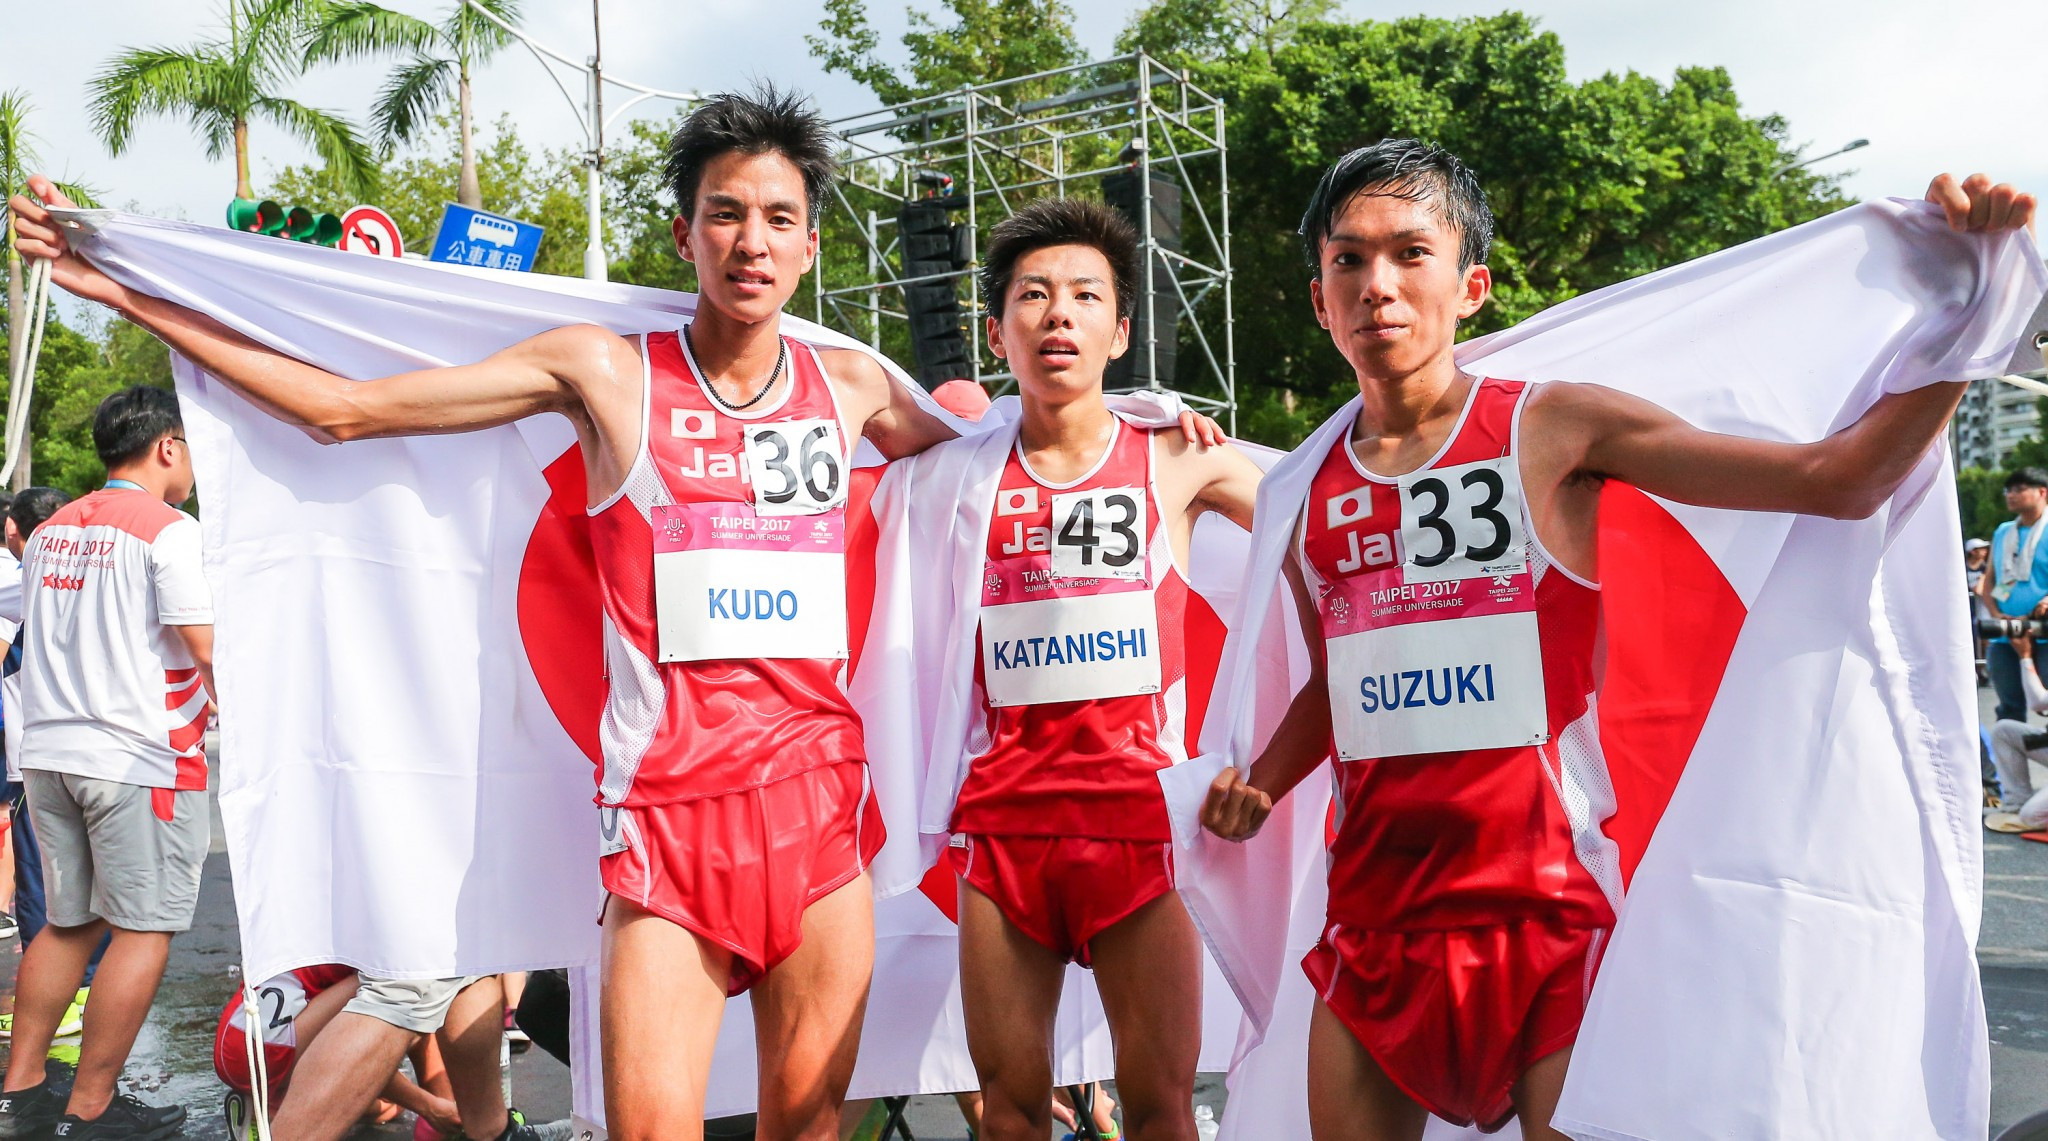 Japan enjoyed a clean sweep in the men's half marathon ©Taipei 2017